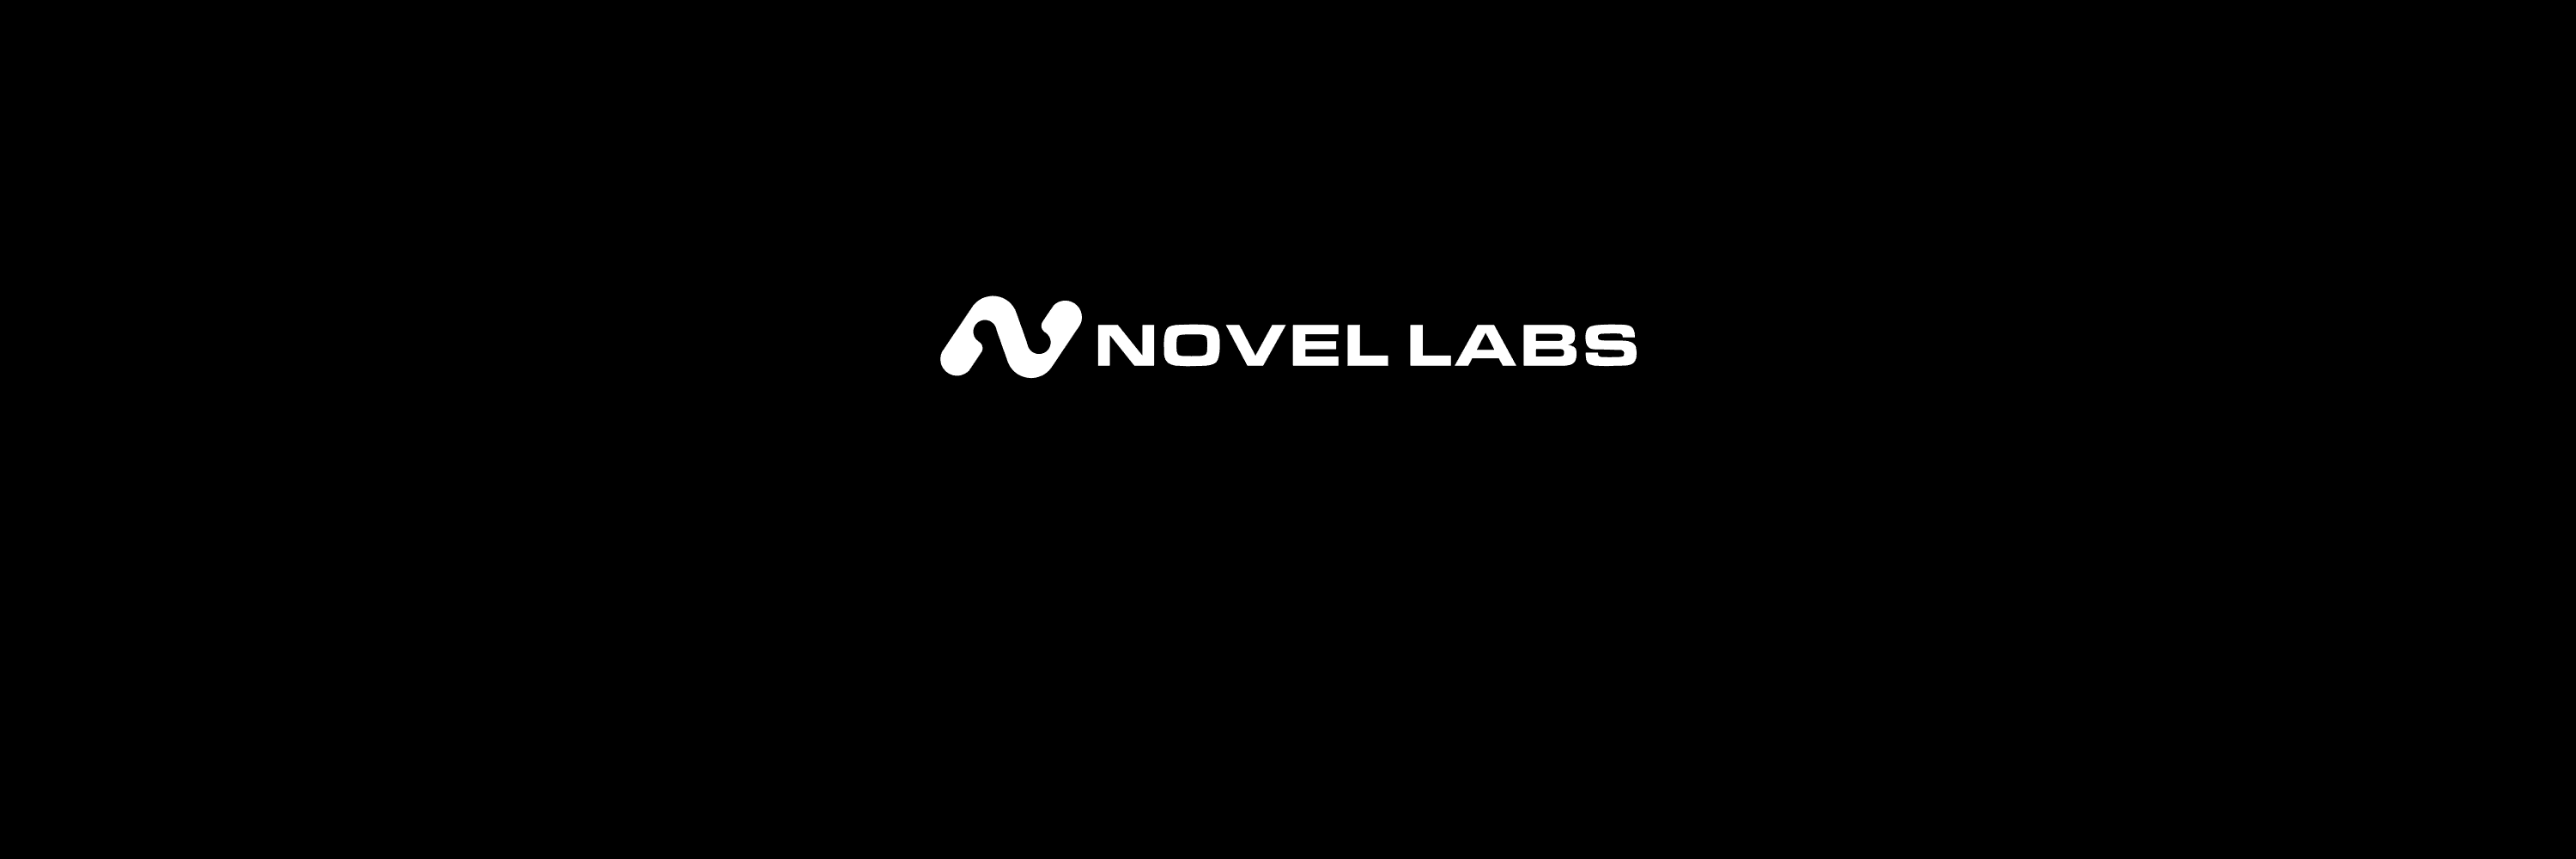 Novel_Labs banner